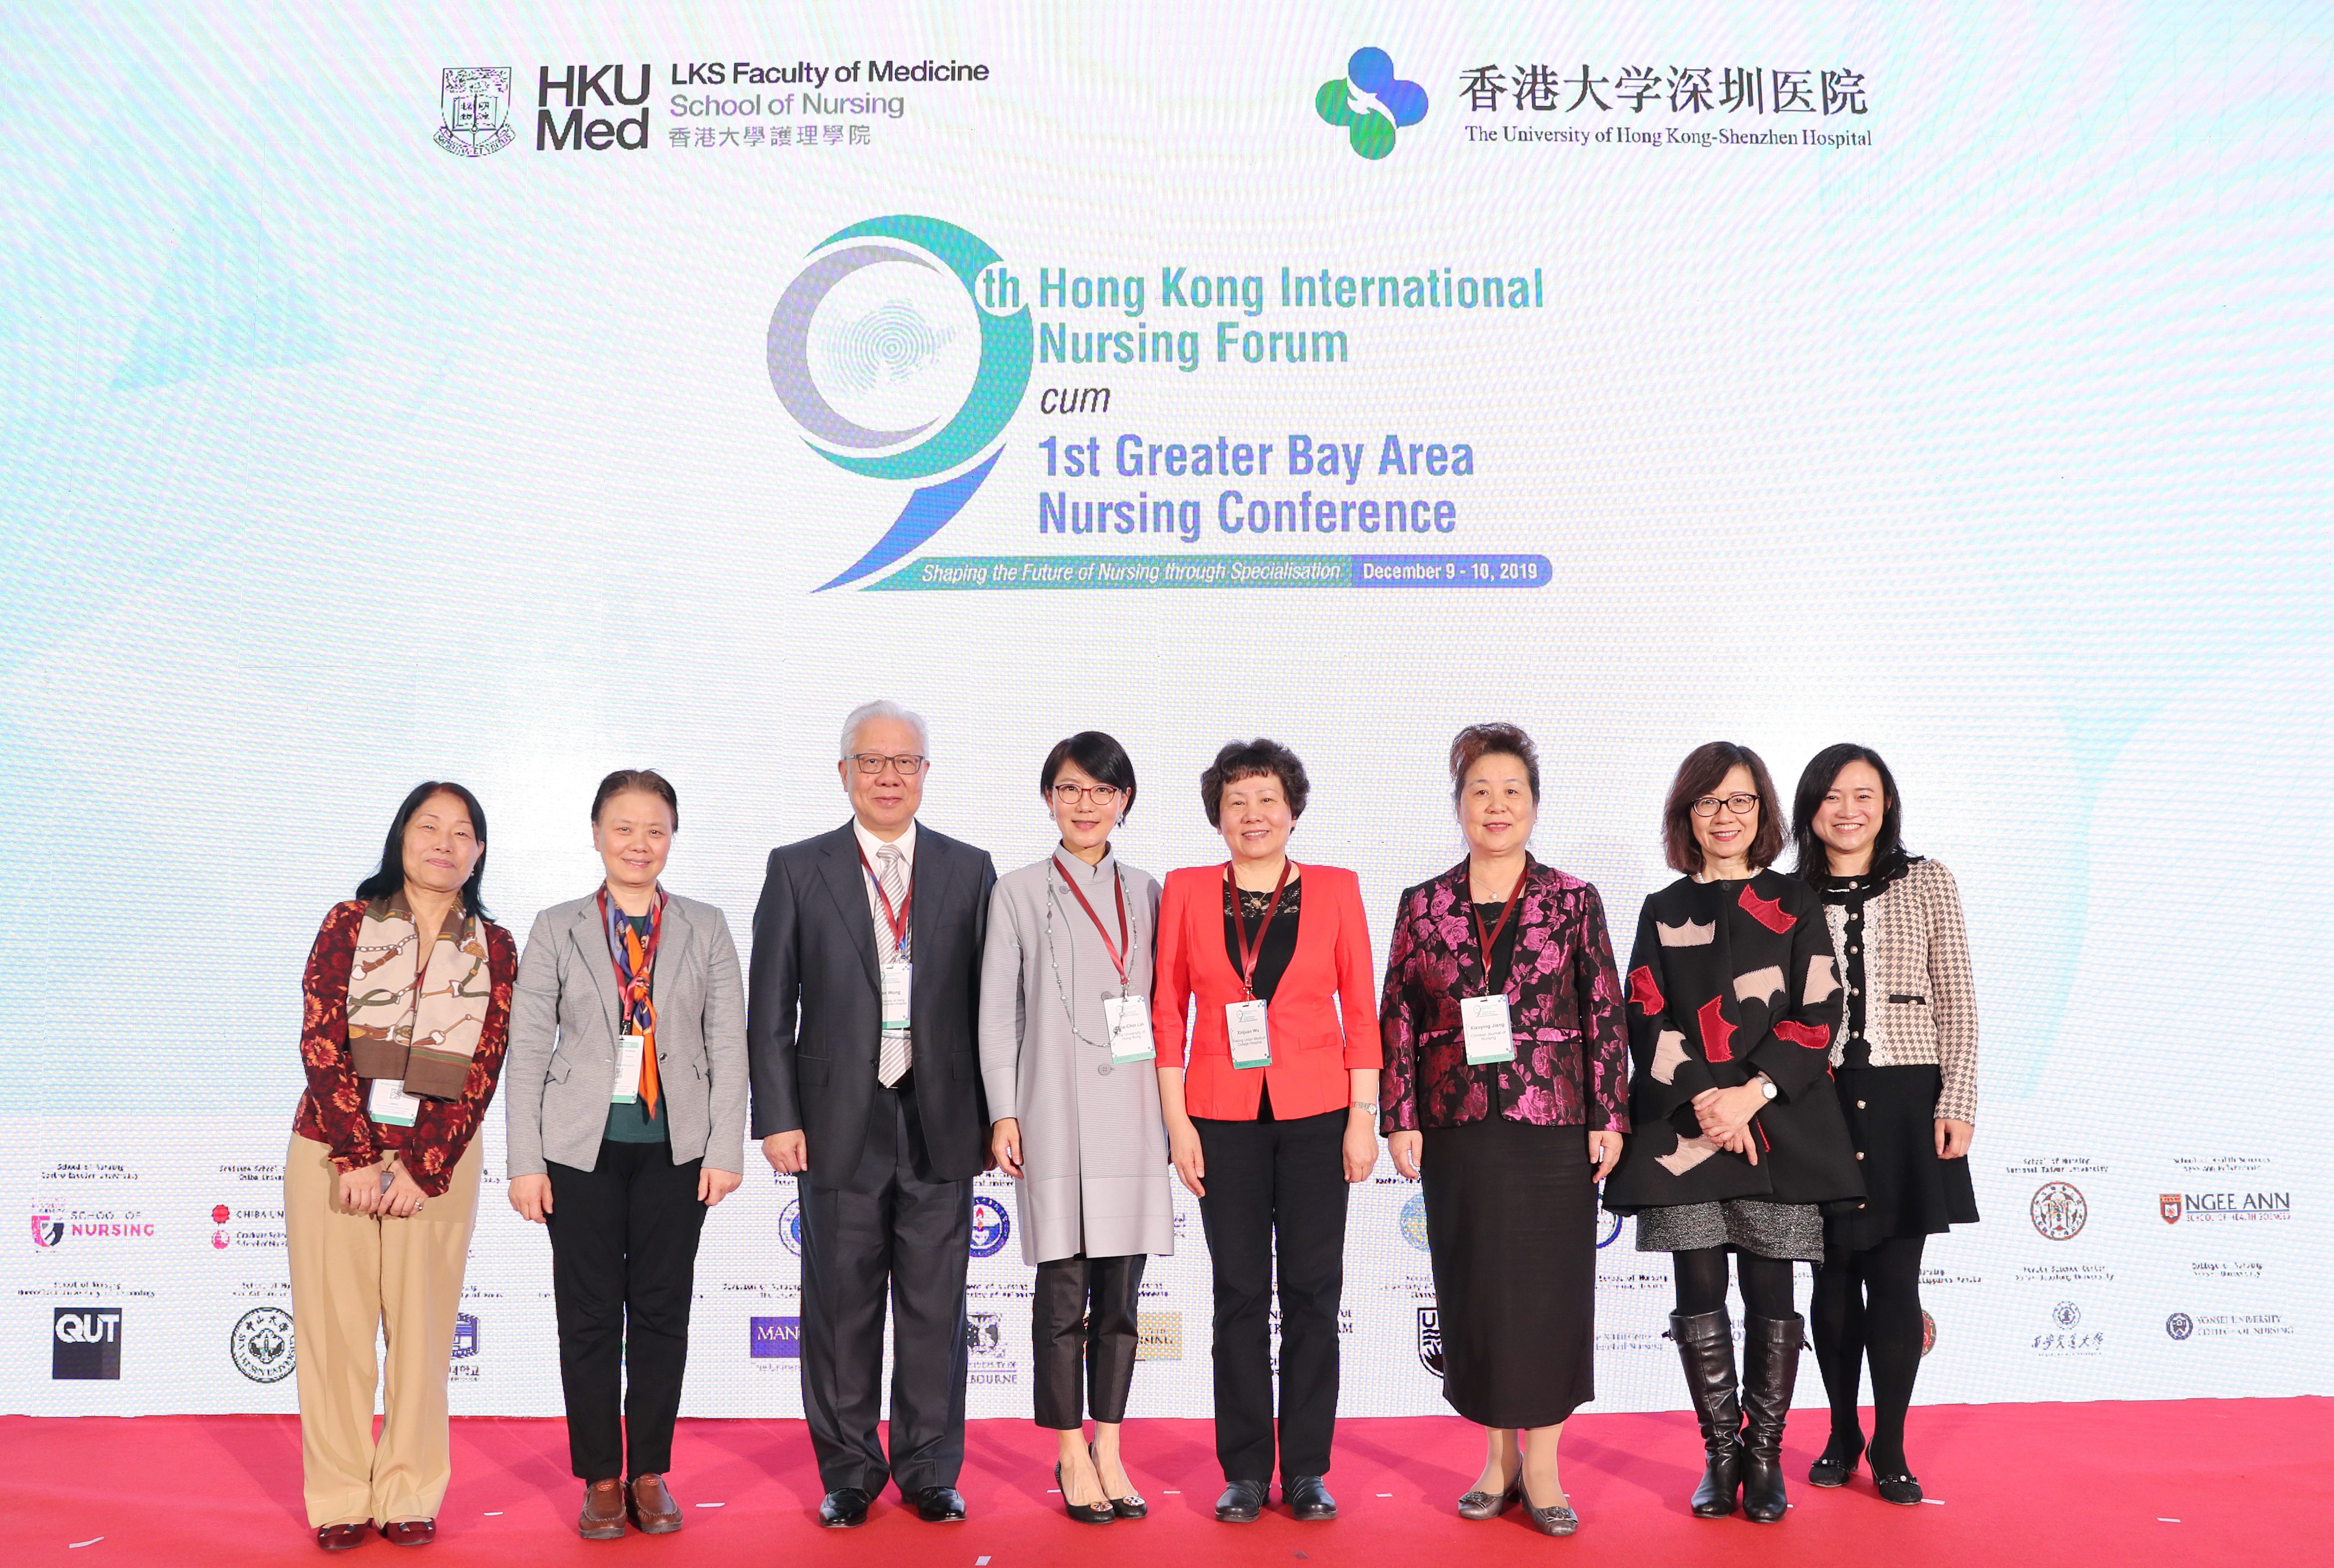 (From Left) Professor Alice Sau Mui Tsang, Professor Shouzhen Cheng, Mr Alan Wong, Professor Chia-Chin Lin, Professor Xinjuan Wu, Professor Xiaoying Jiang, Ms Susanna Lee, and Dr Janet Wong.